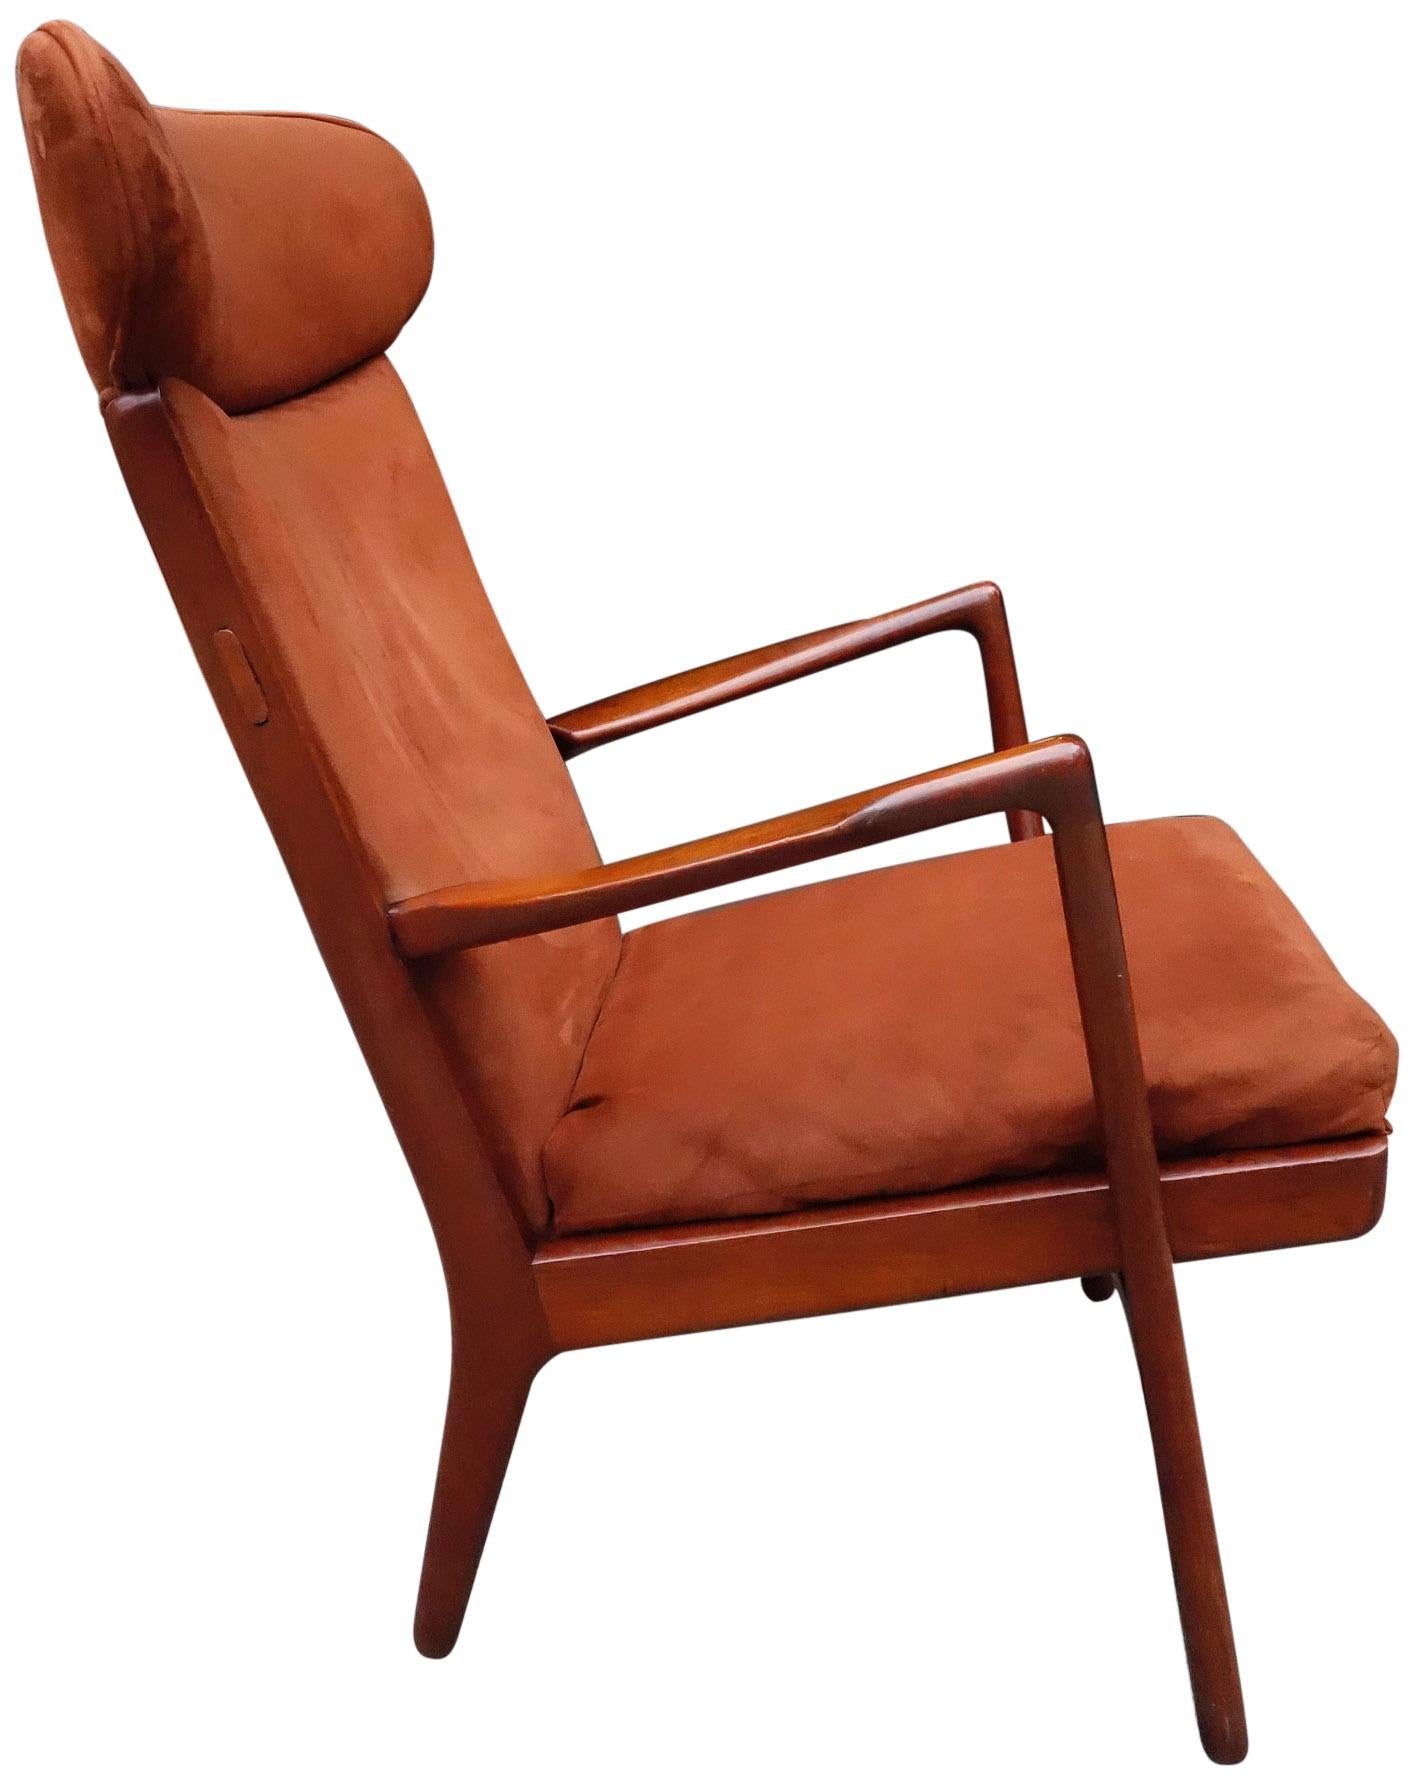 Hervorragender Hans Wegner Lounge Chair aus der Jahrhundertmitte (Teakholz) im Angebot